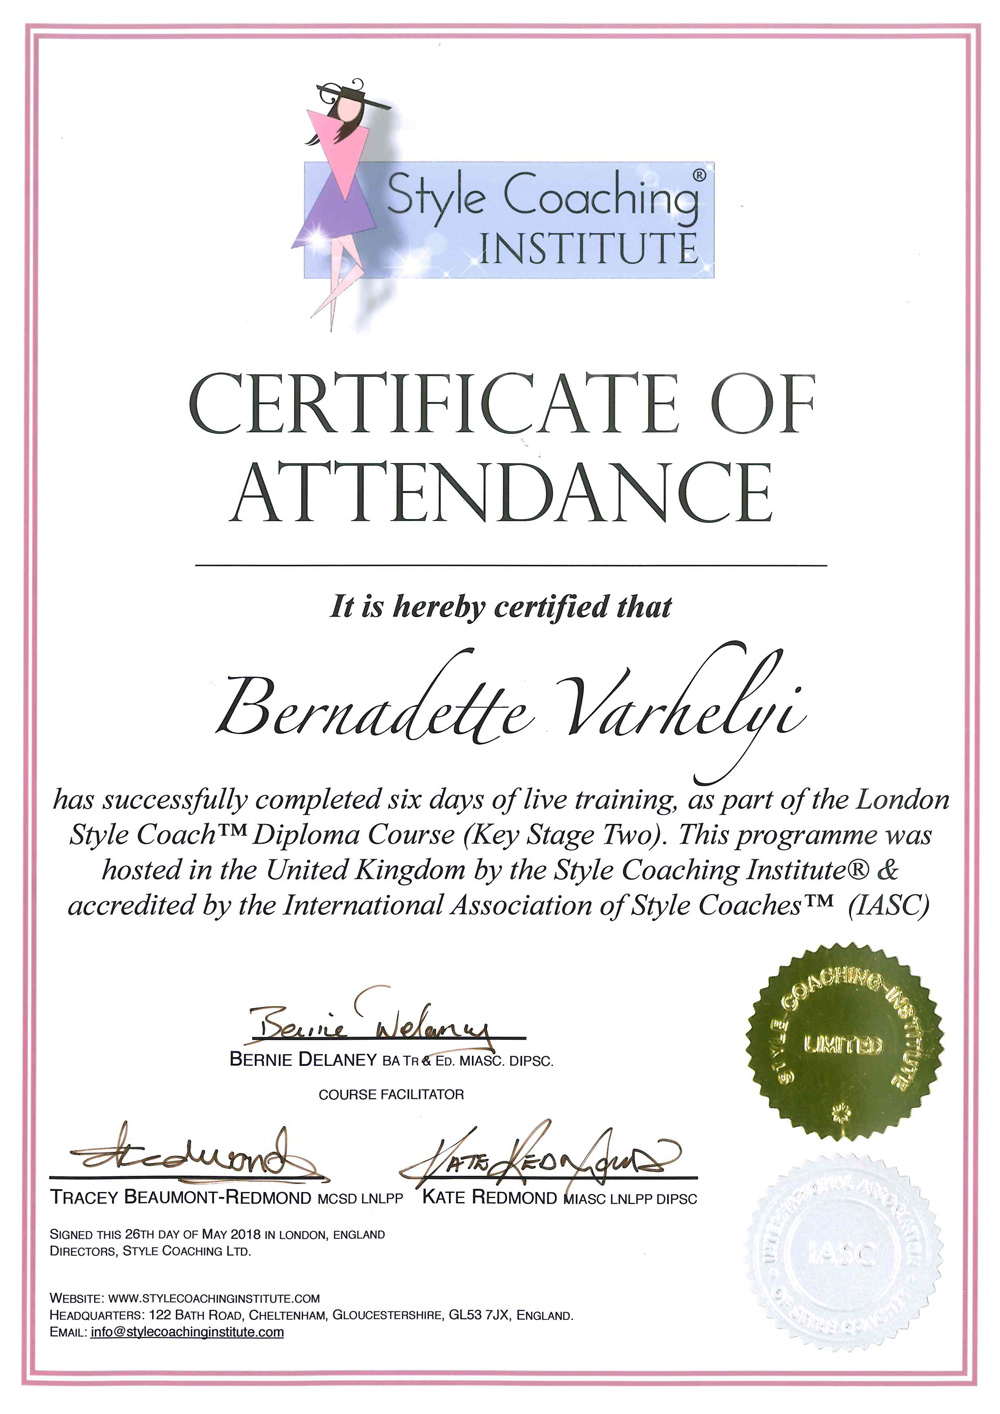 Style Coaching Institute Certificate